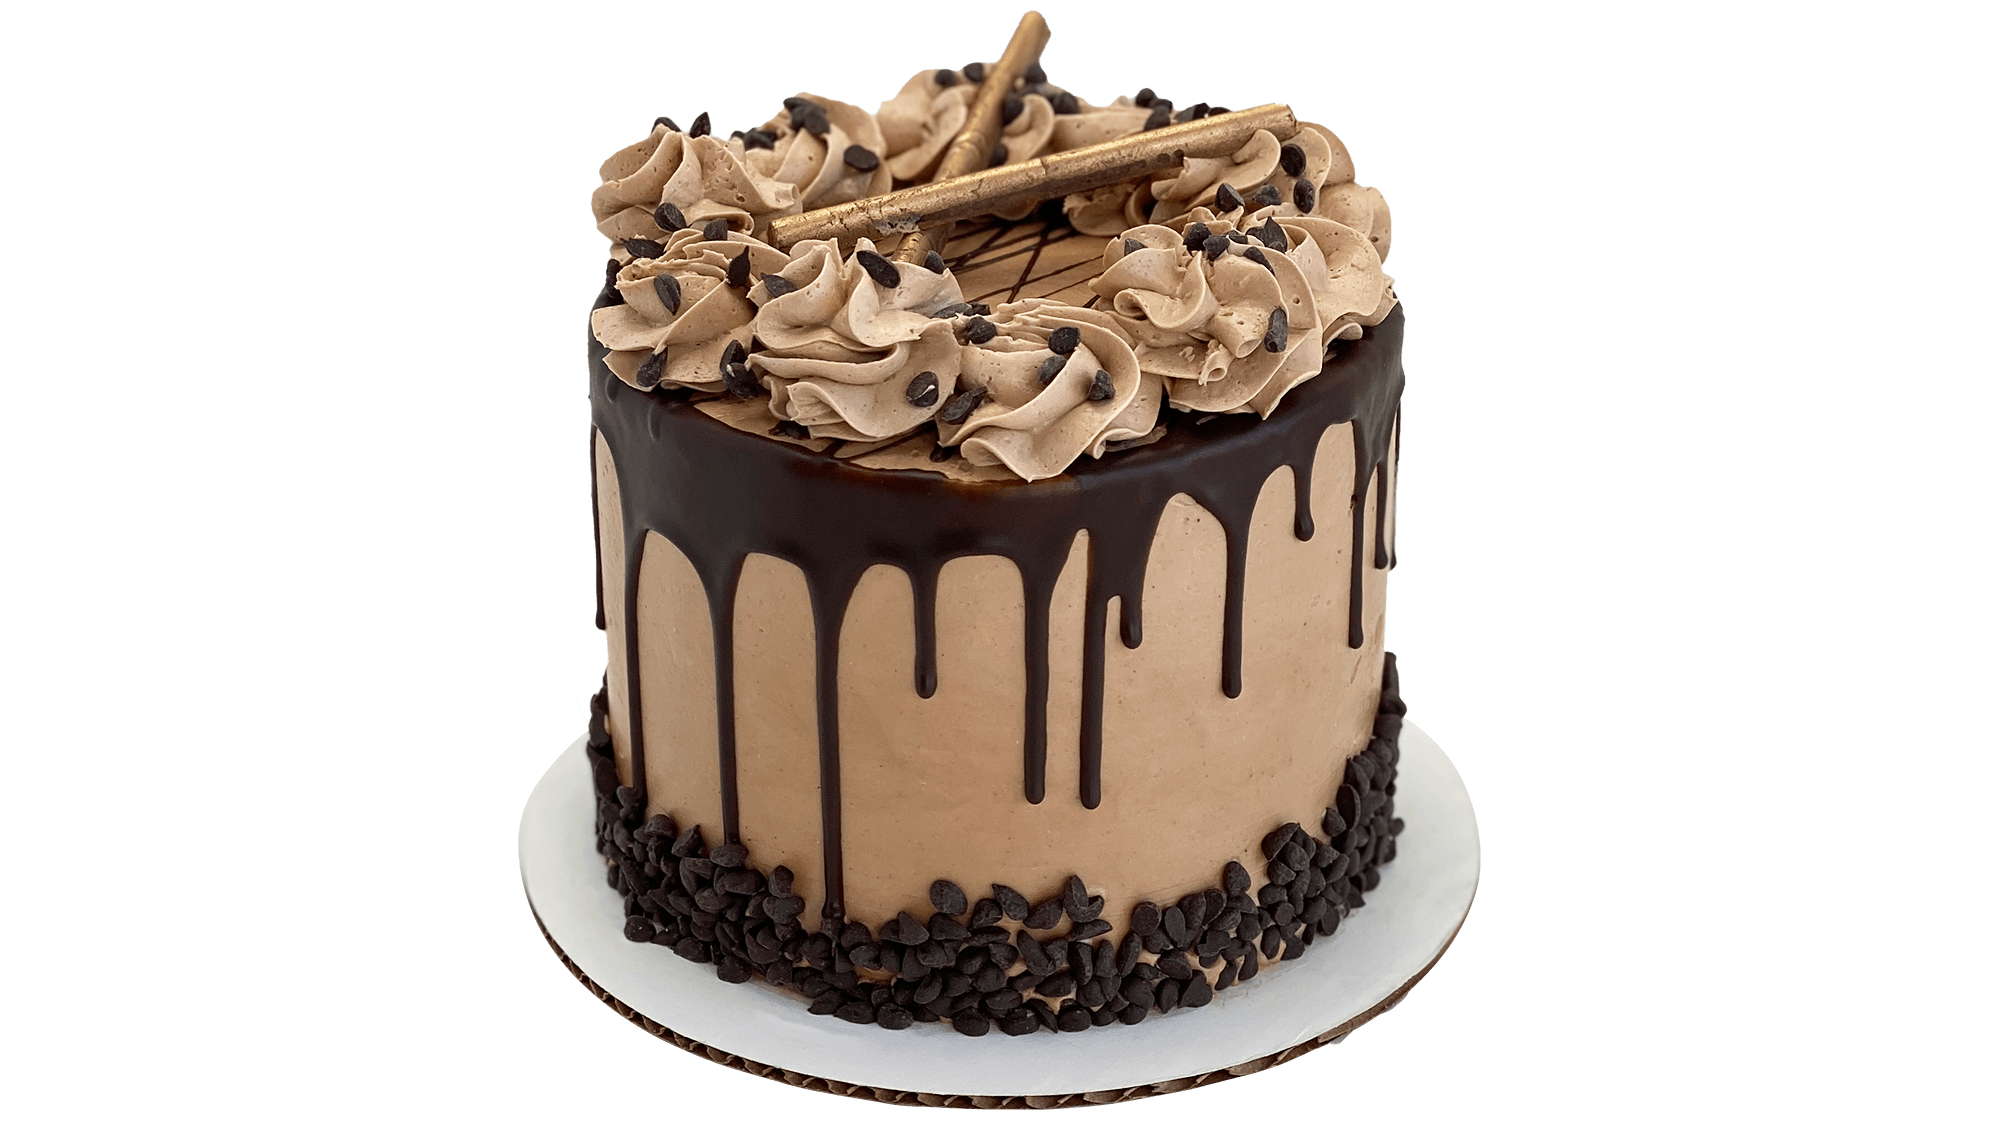 Pudding Filled Chocolate Cake Recipe - Something Swanky